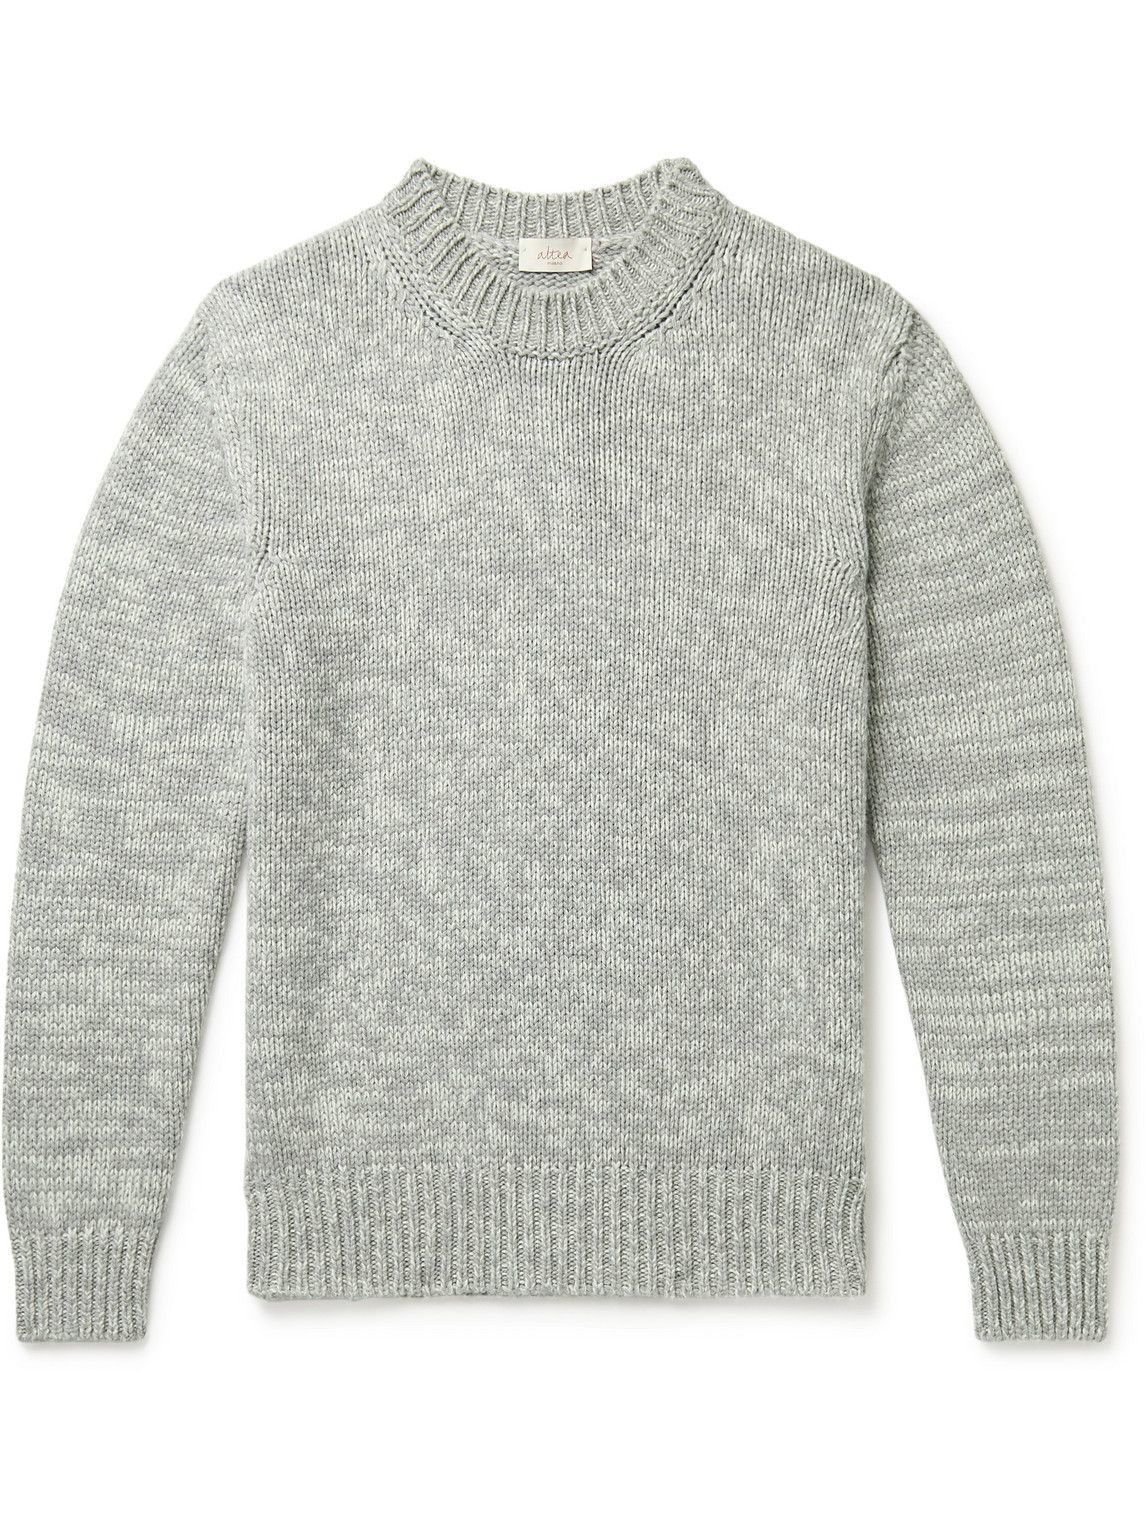 Altea - Cashmere Sweater - Gray Altea